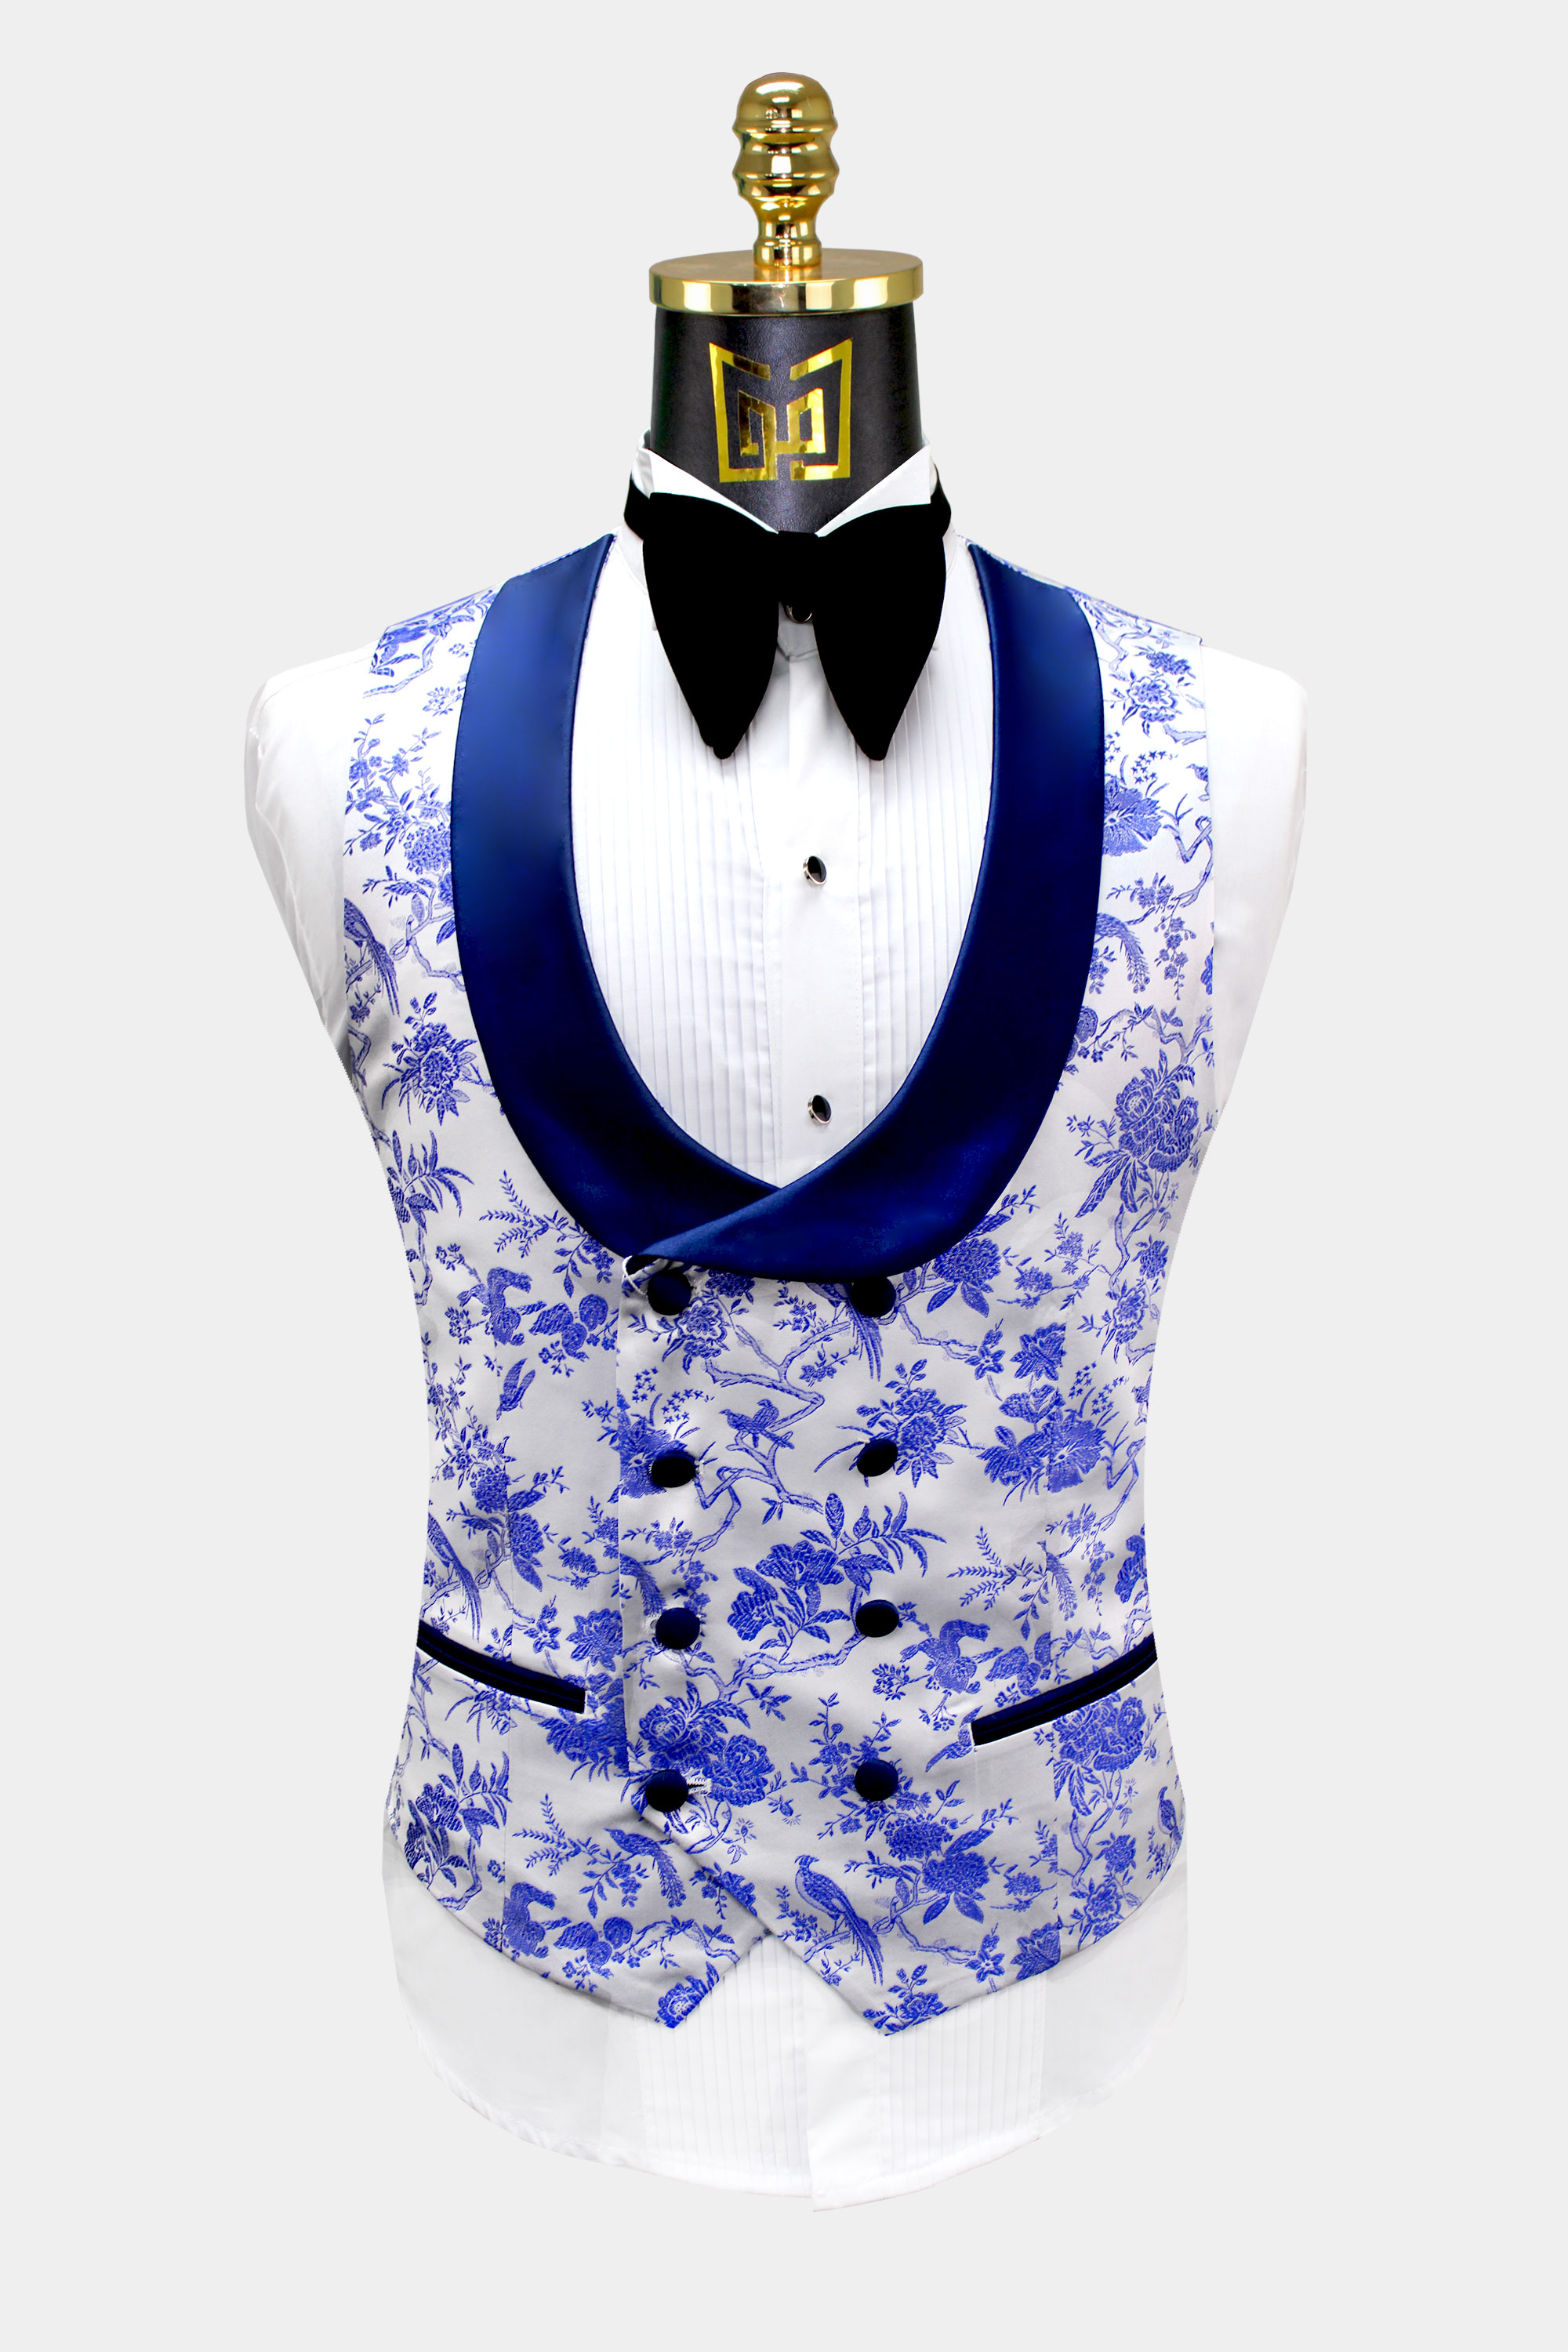 Electric-Blue-Floral-Tuxedo-Vest-from-Gentlemansguru.com